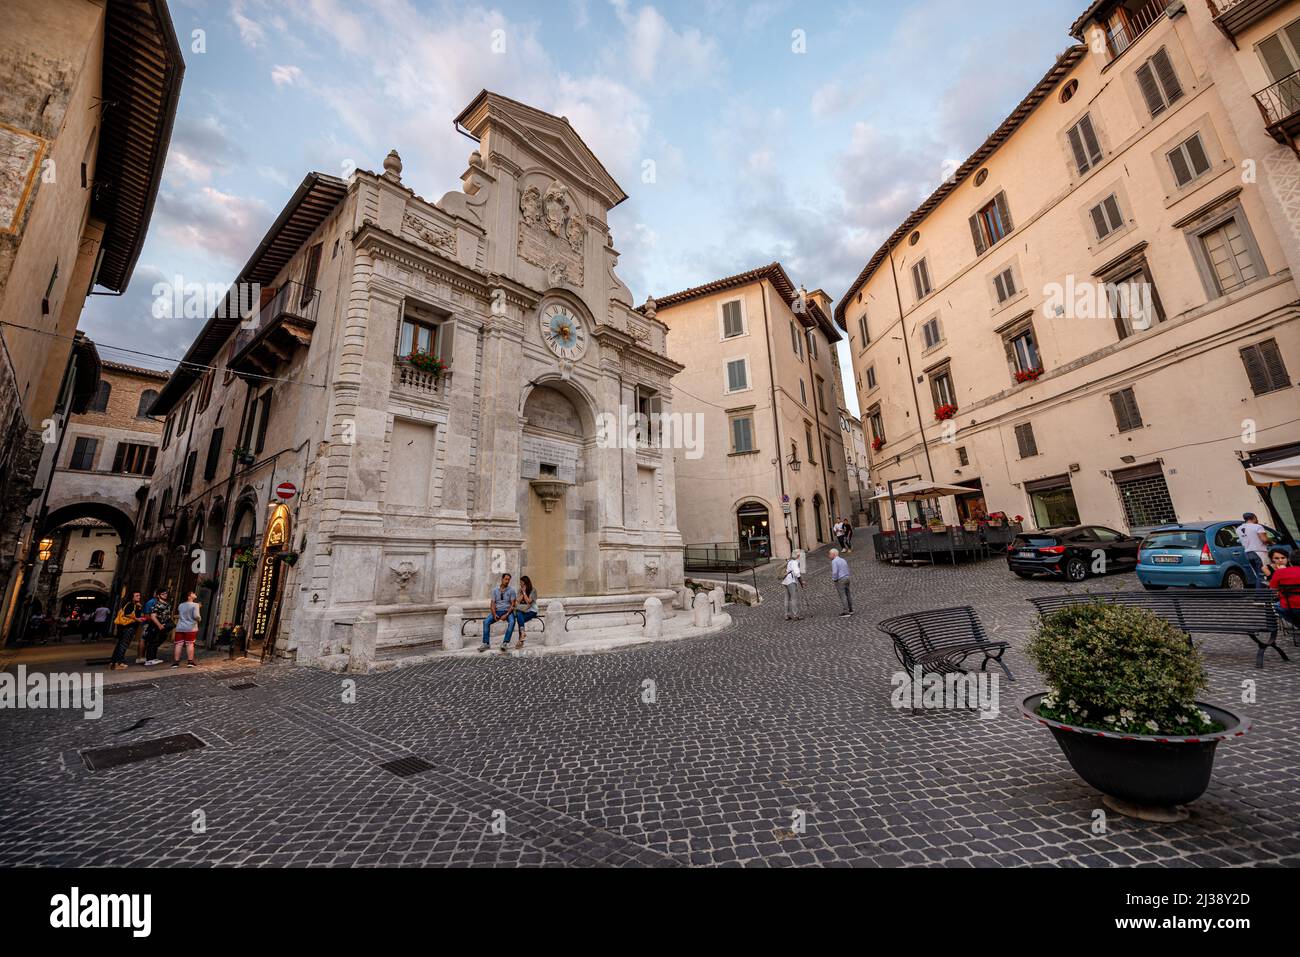 Fontana monumentale in Piazza del mercato, Spoleto, Umbria, Italia Foto Stock